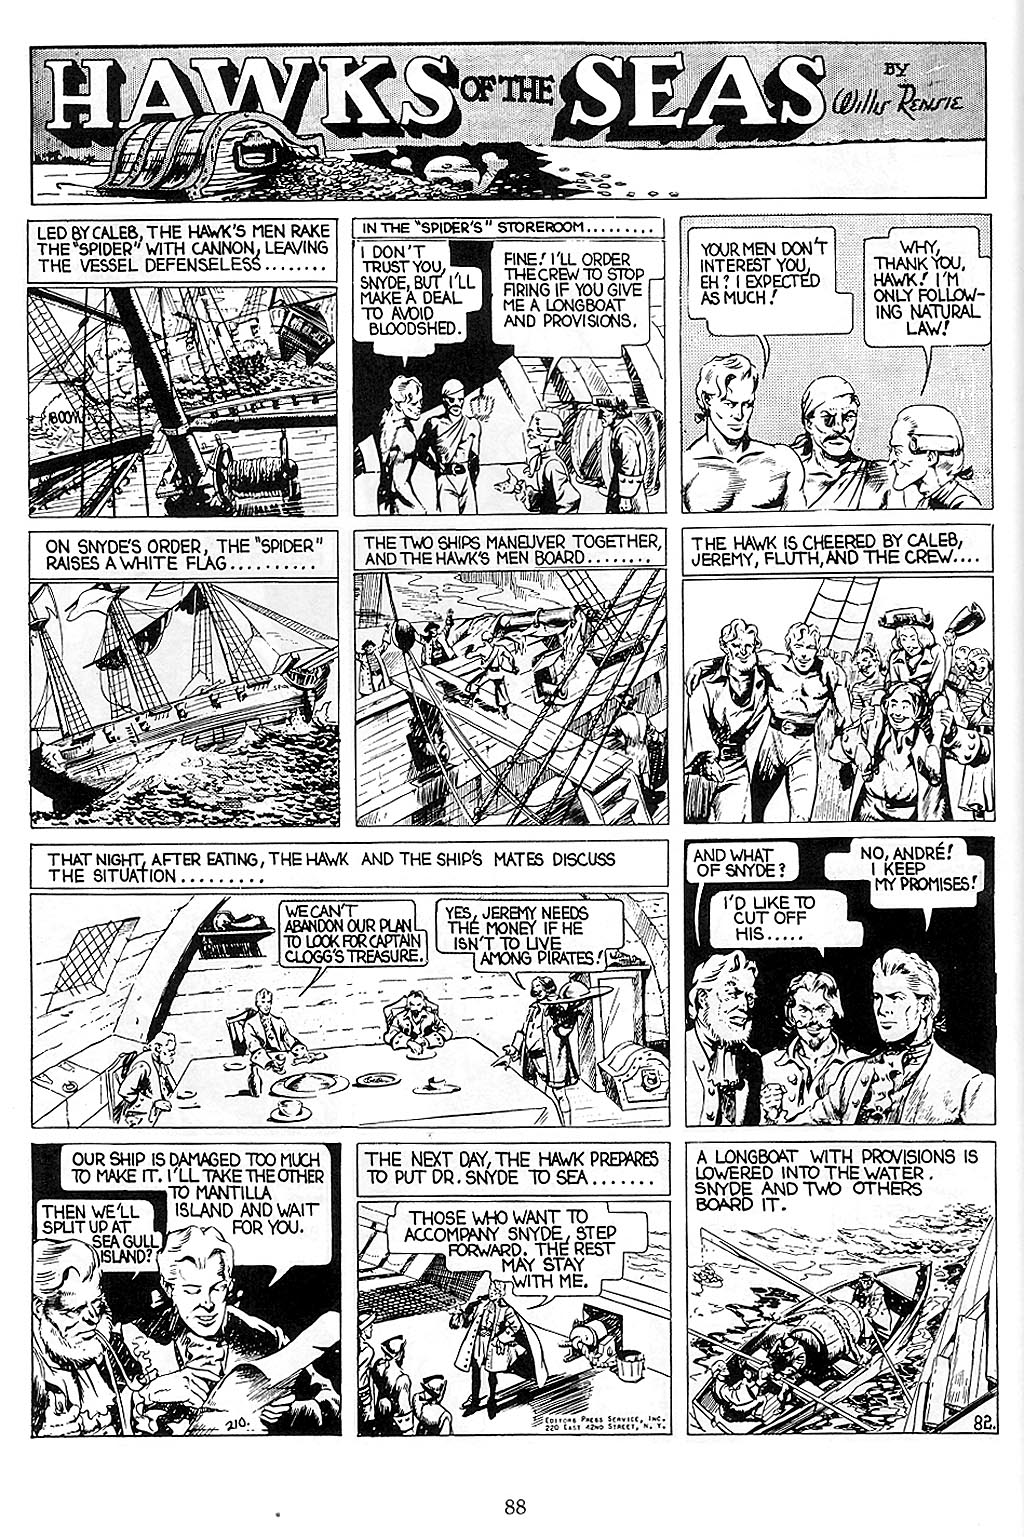 Read online Will Eisner's Hawks of the Seas comic -  Issue # TPB - 89